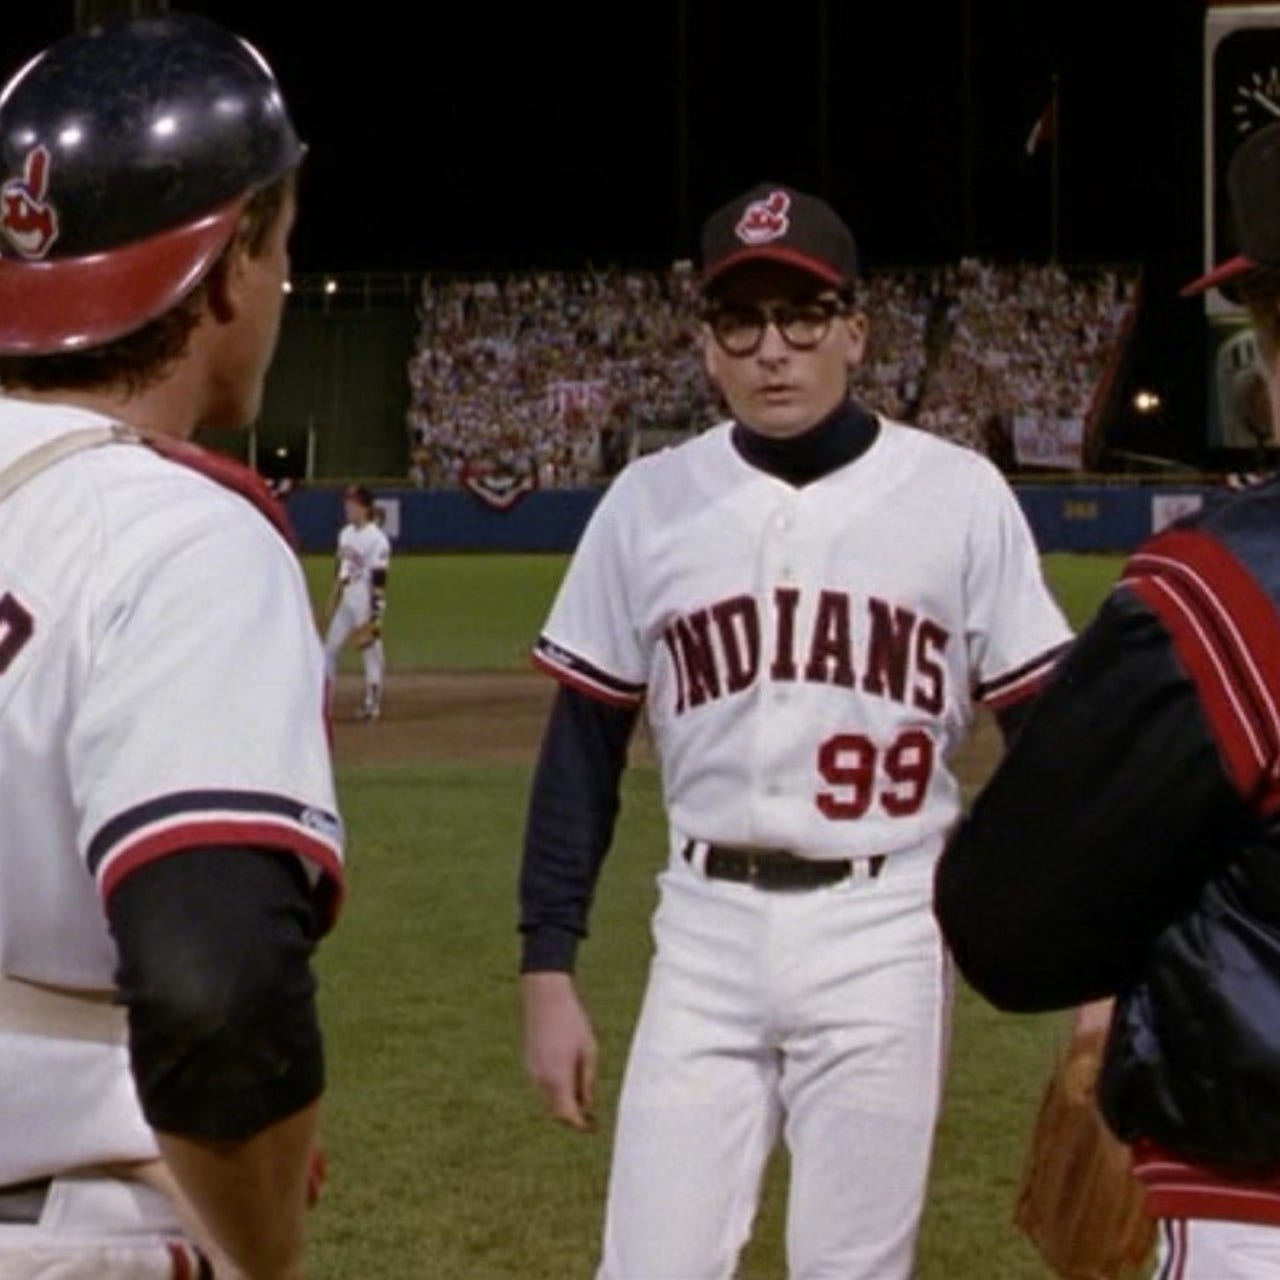 Movie Ricky Vaughn 99 Baseball Jersey the Wild -  Denmark